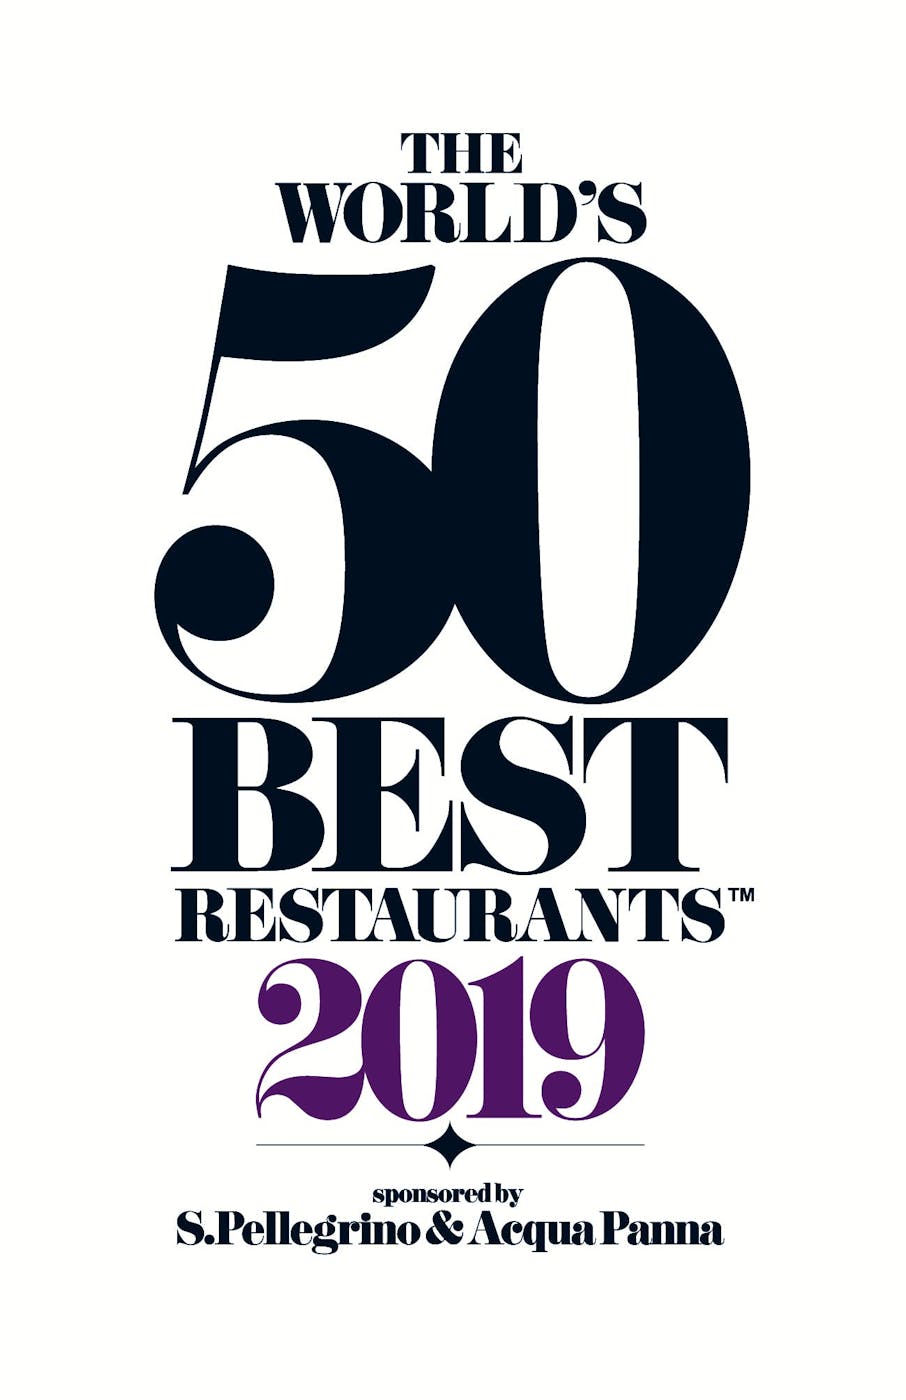 Dekton® by Cosentino: Official Sponsor of The World’s 50 Best Restaurants 2019